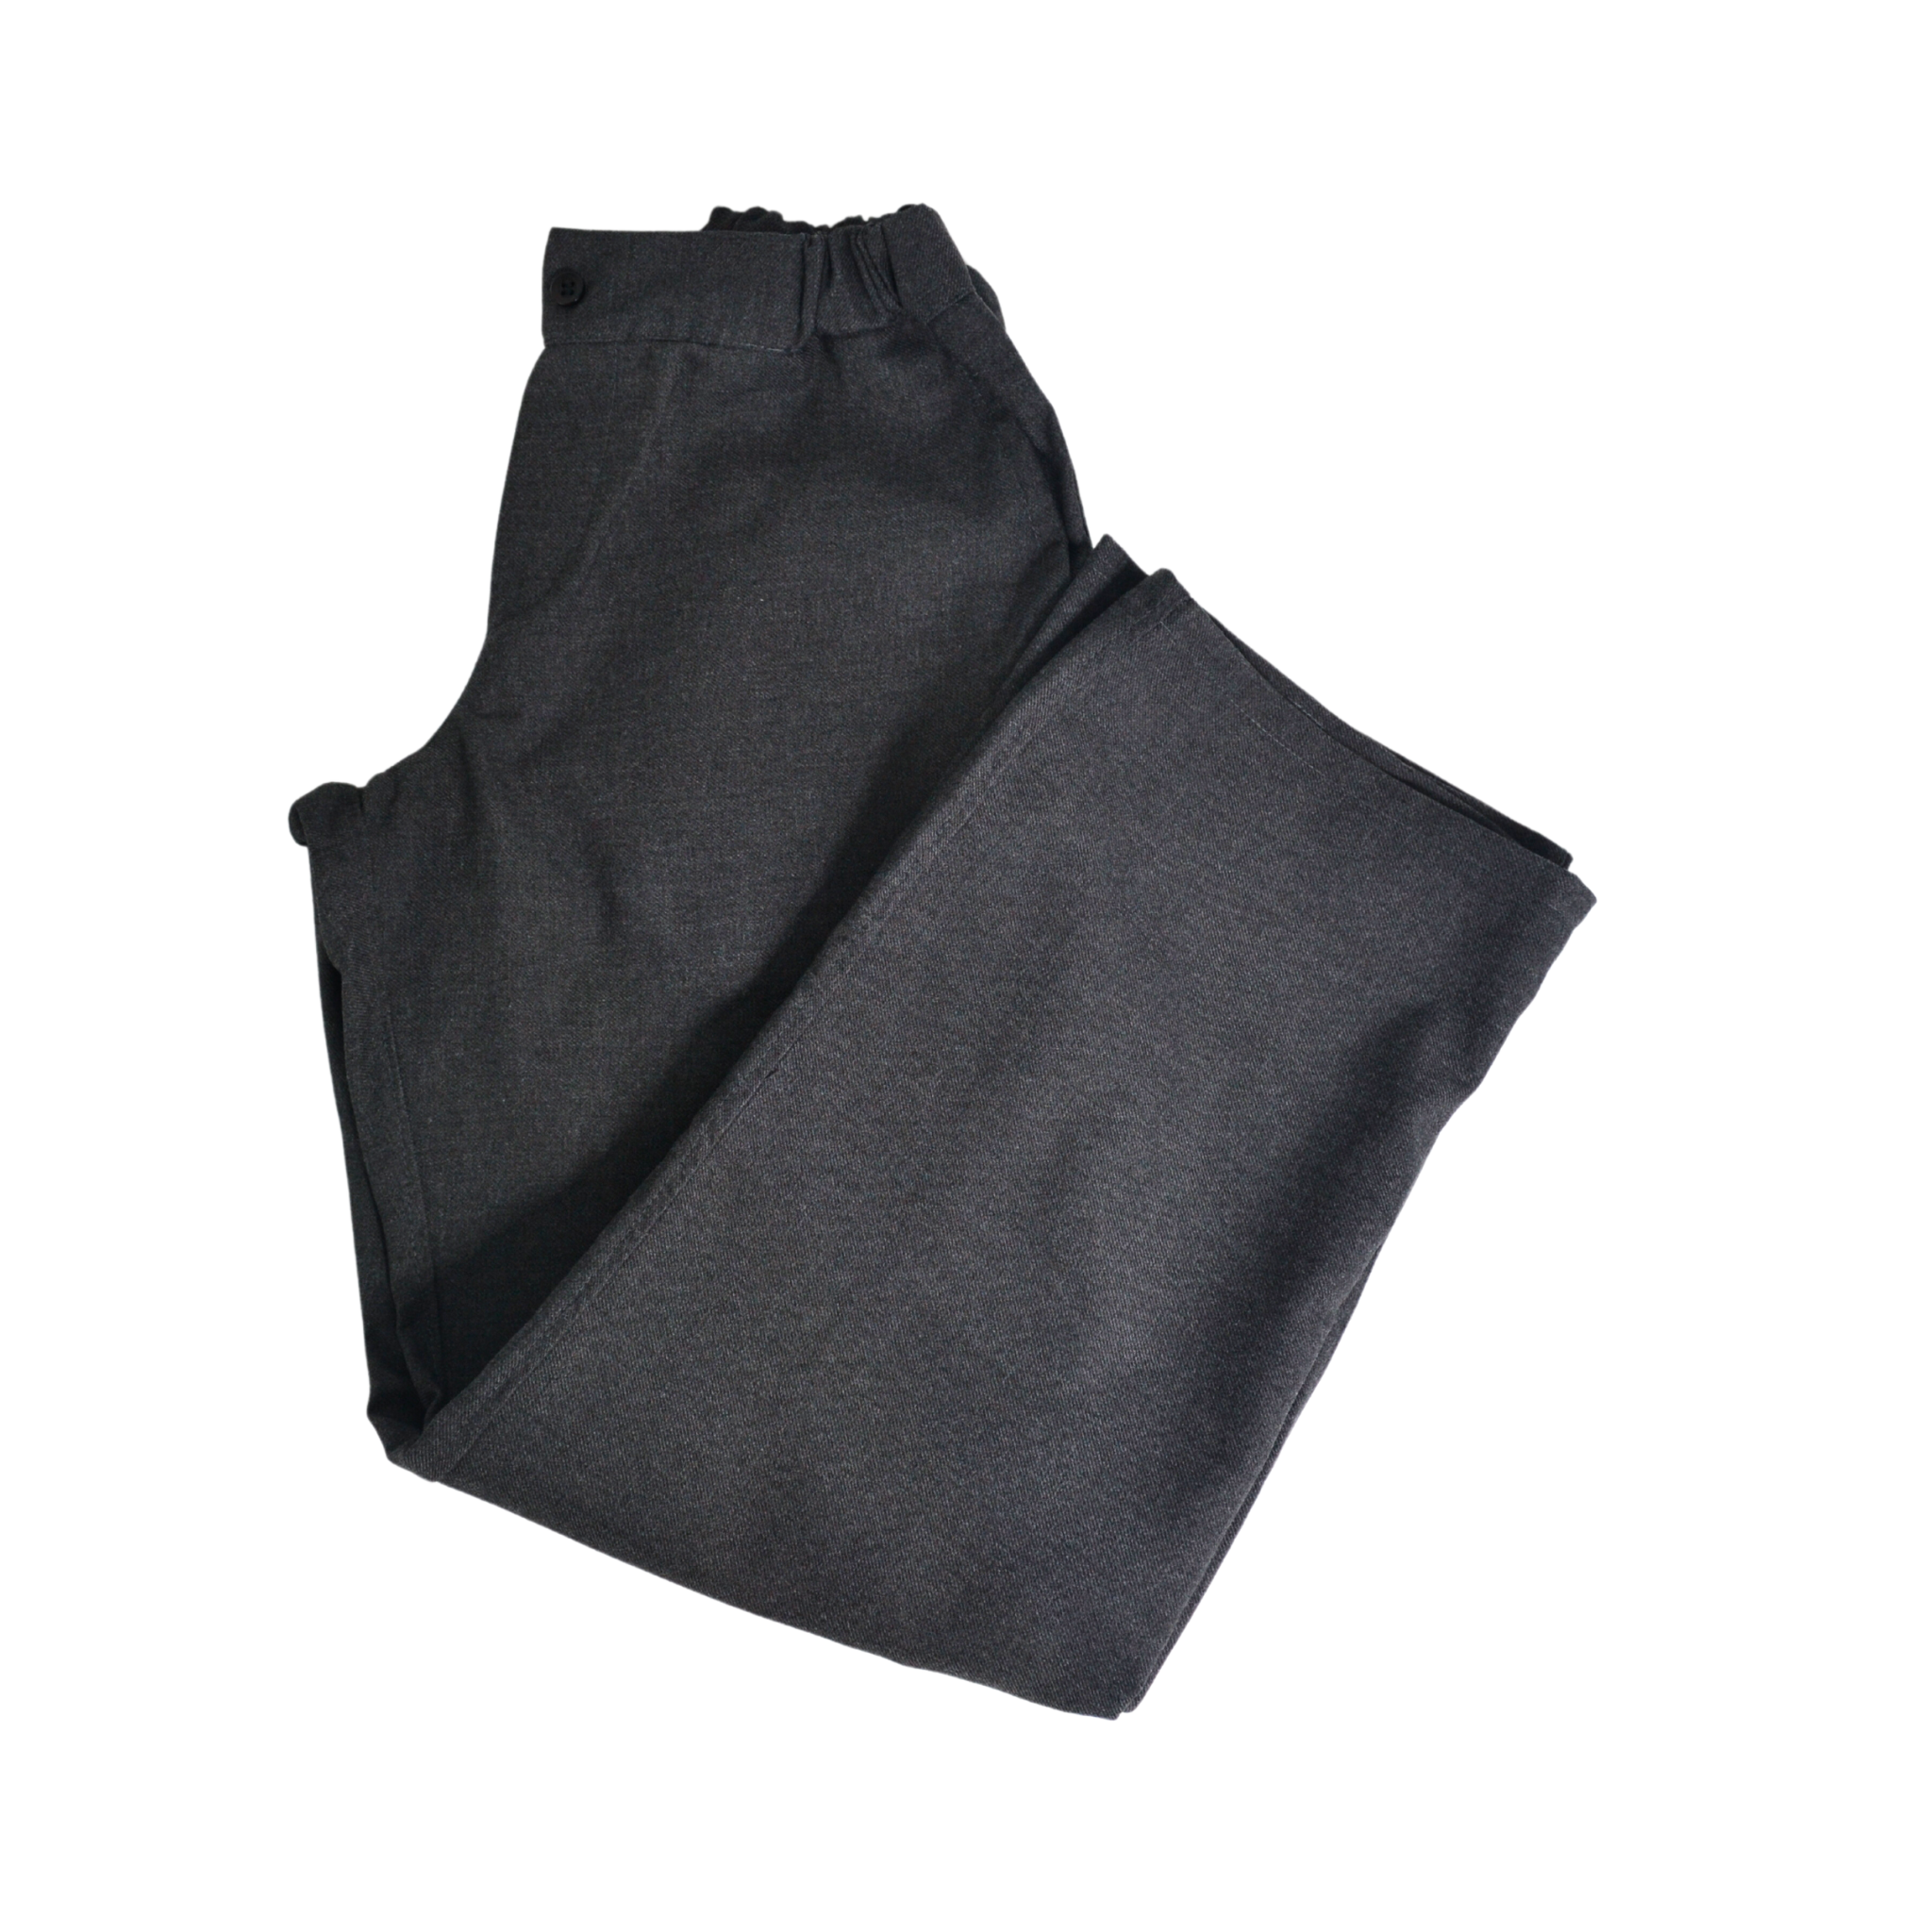 Spectra Sensory Clothing - Autism Friendly Black School Trousers